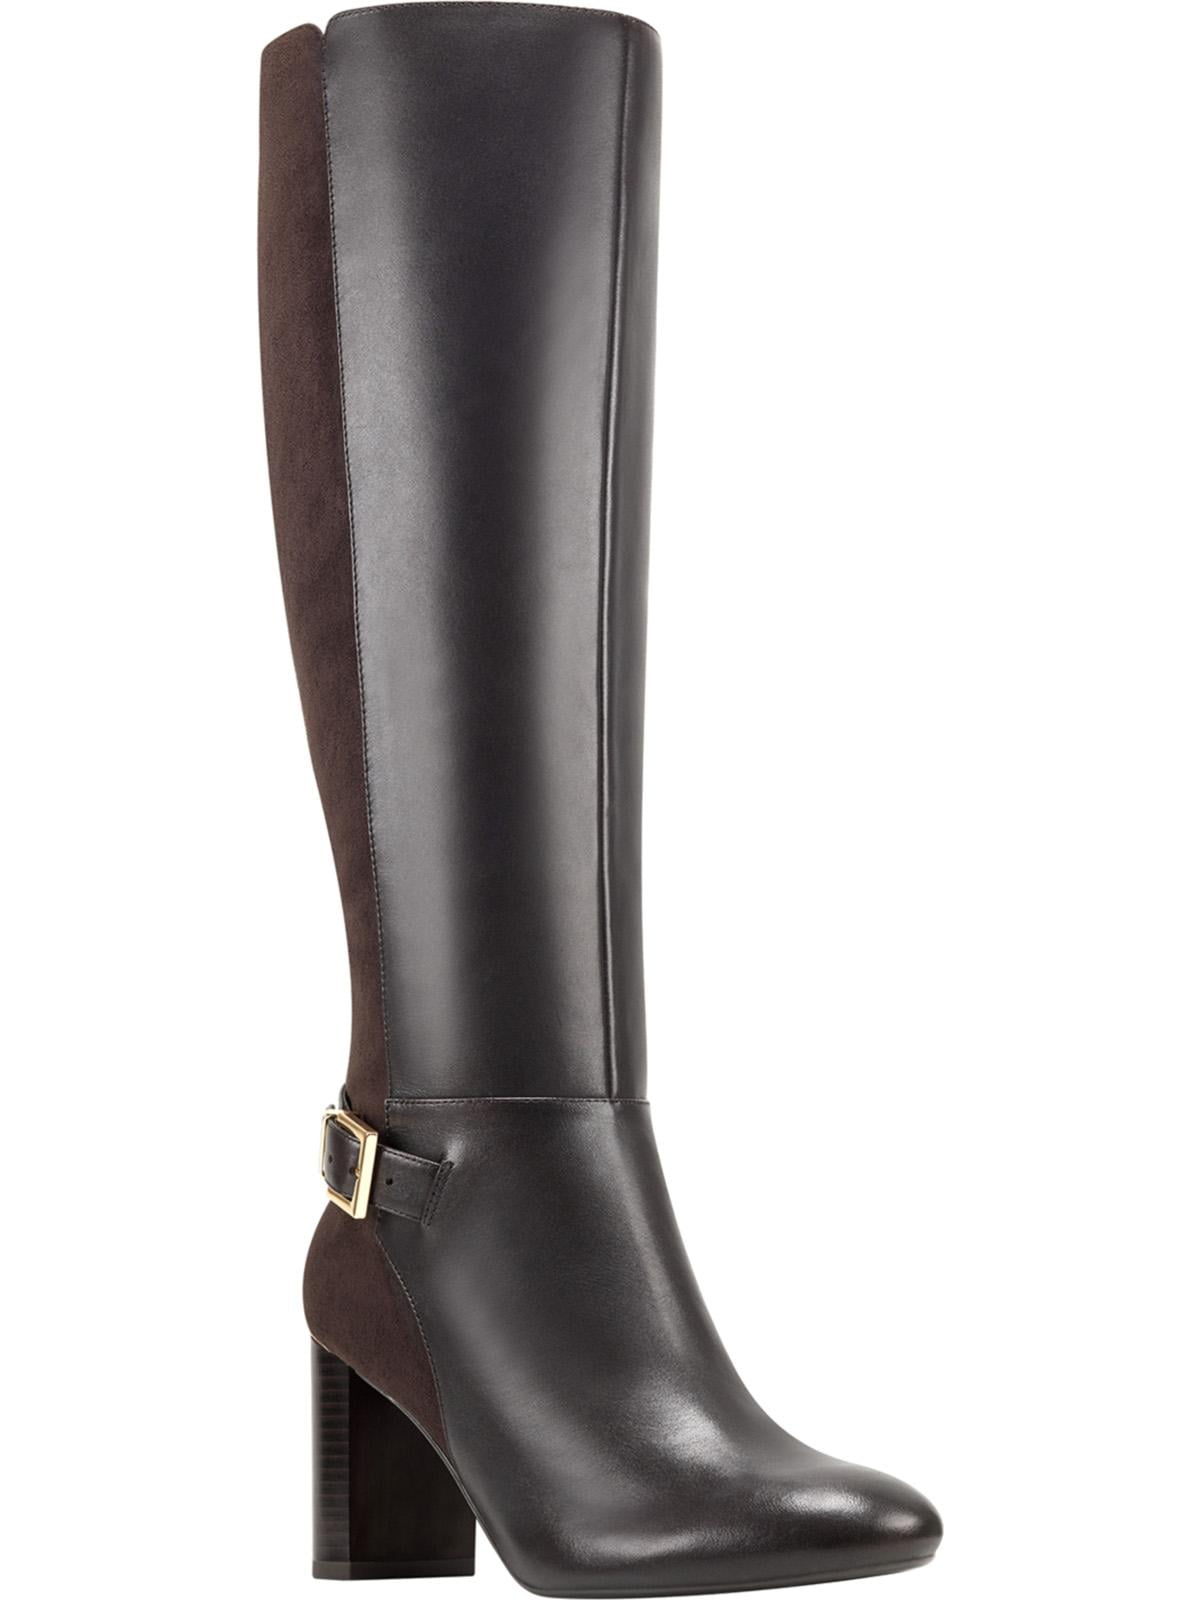 Bandolino Womens Bilya Leather Knee-High Riding Boots Brown 8 Medium (B,M)